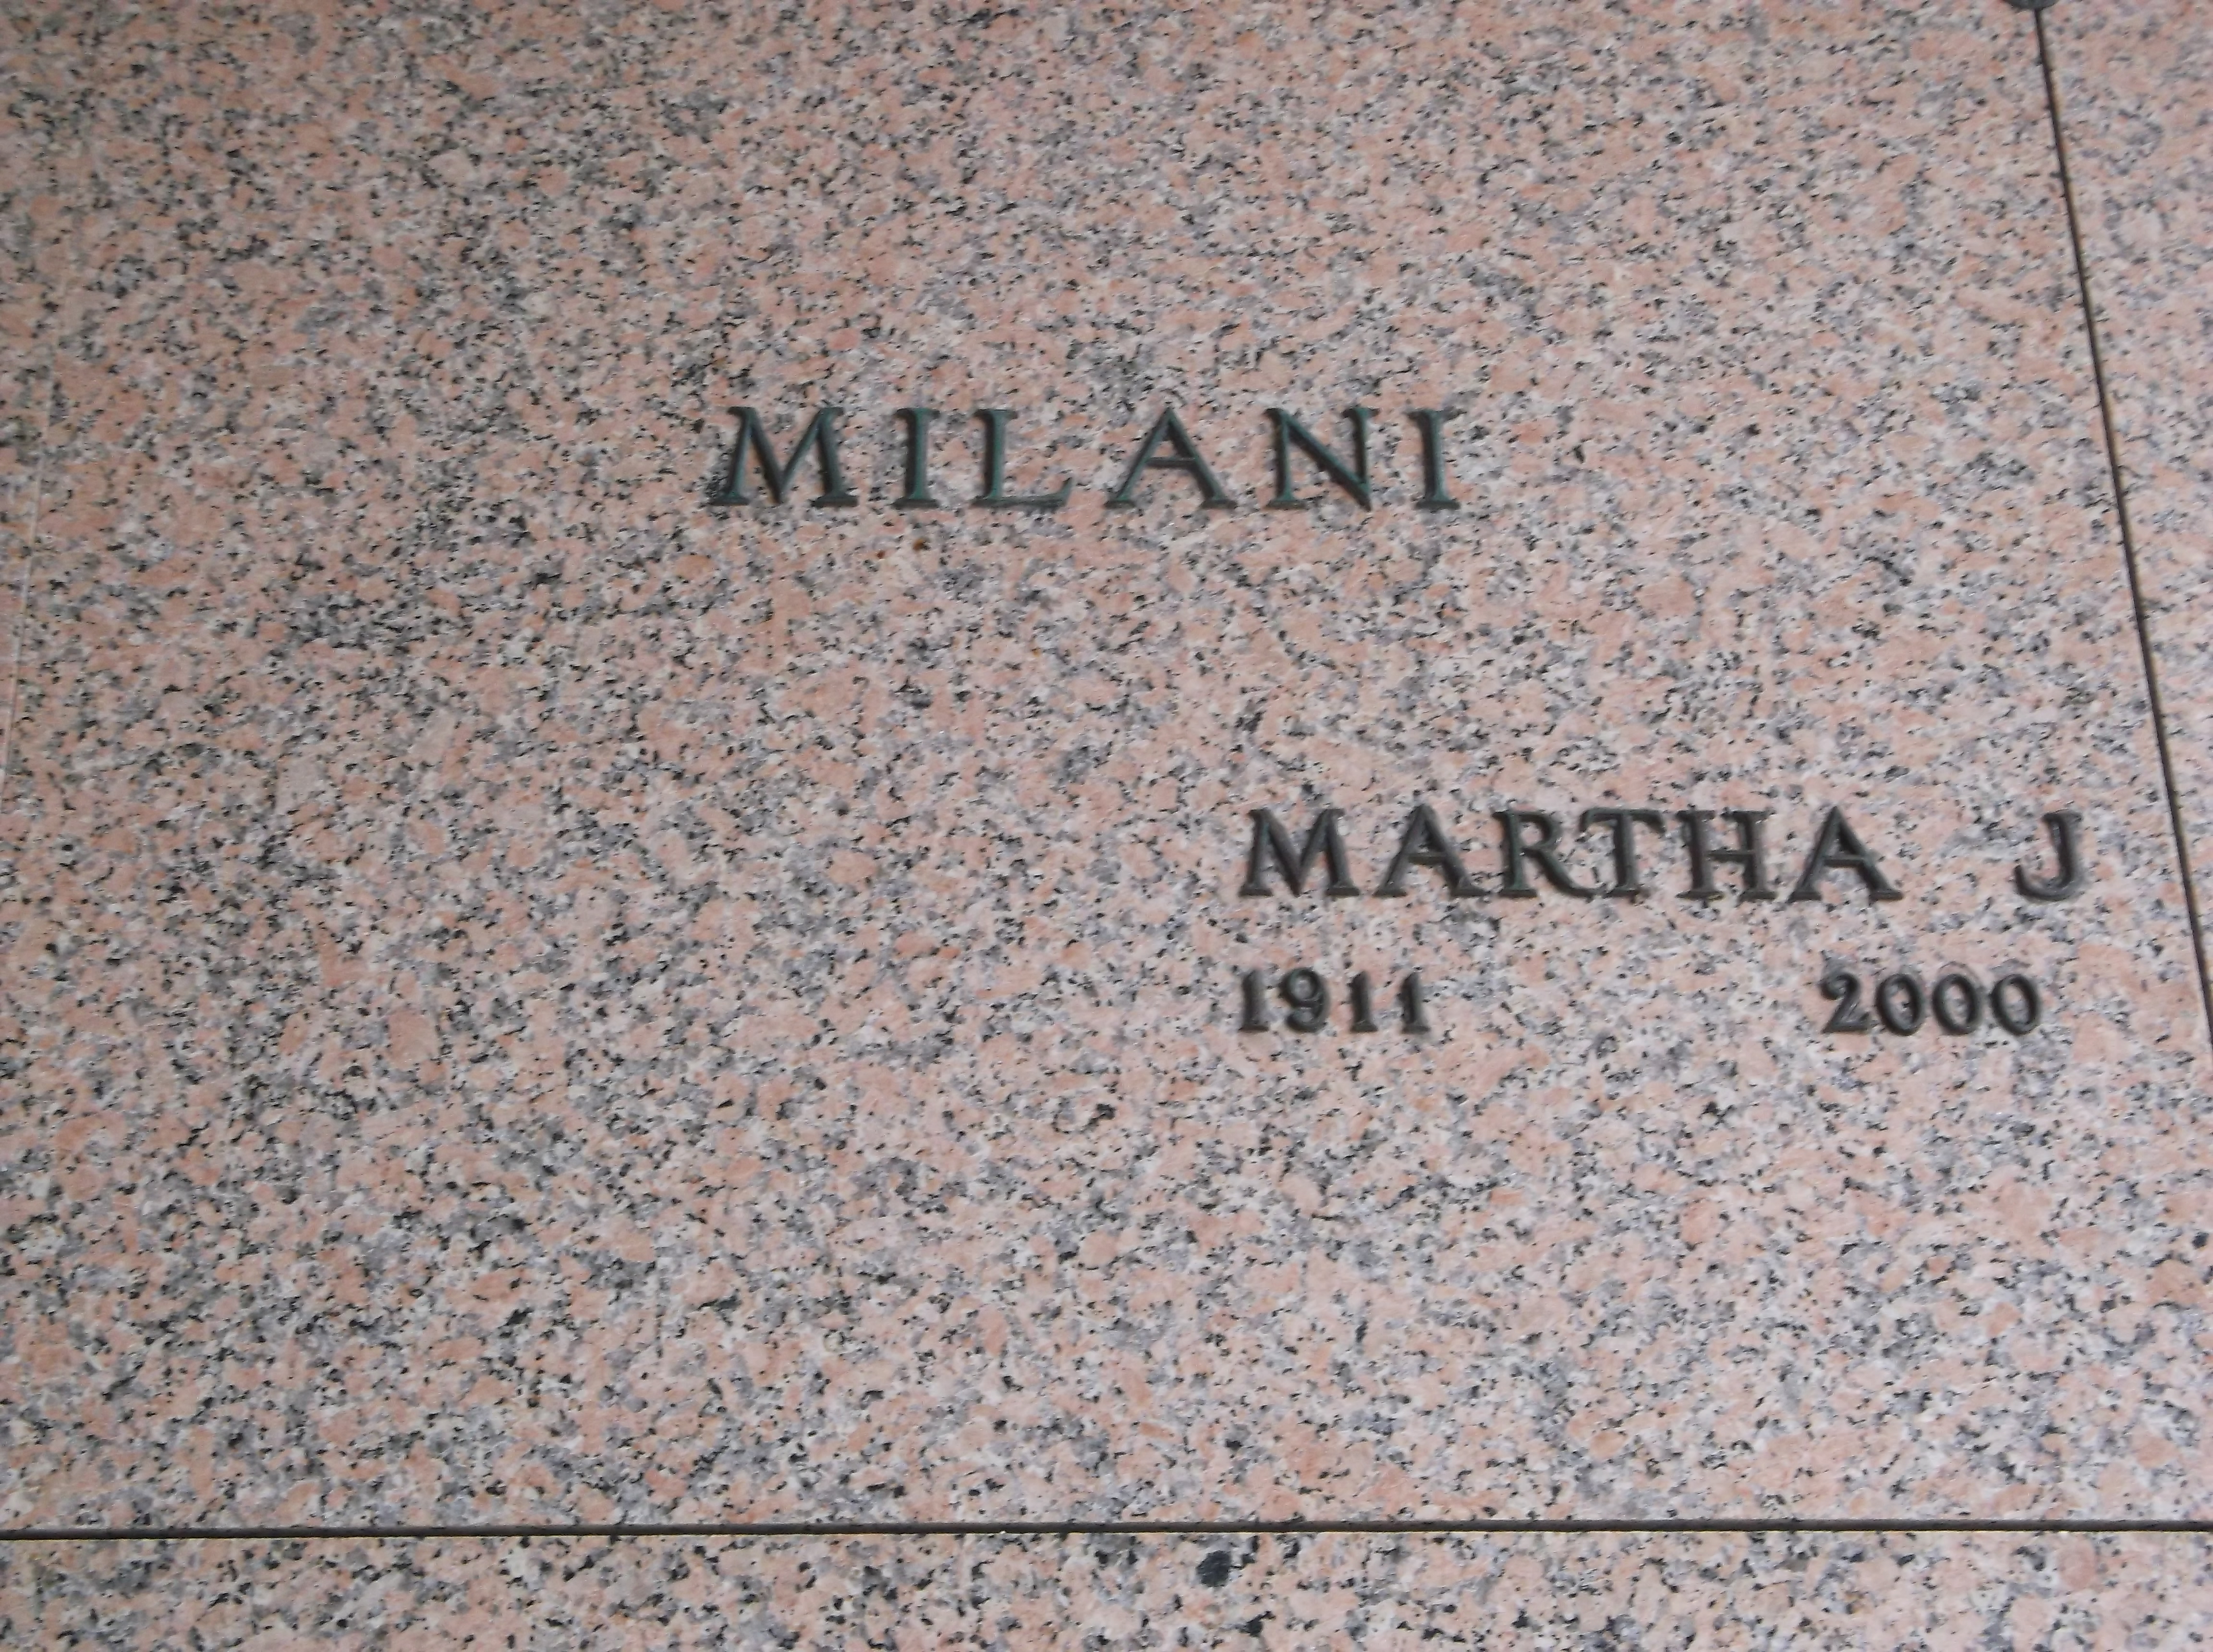 Martha J Milani